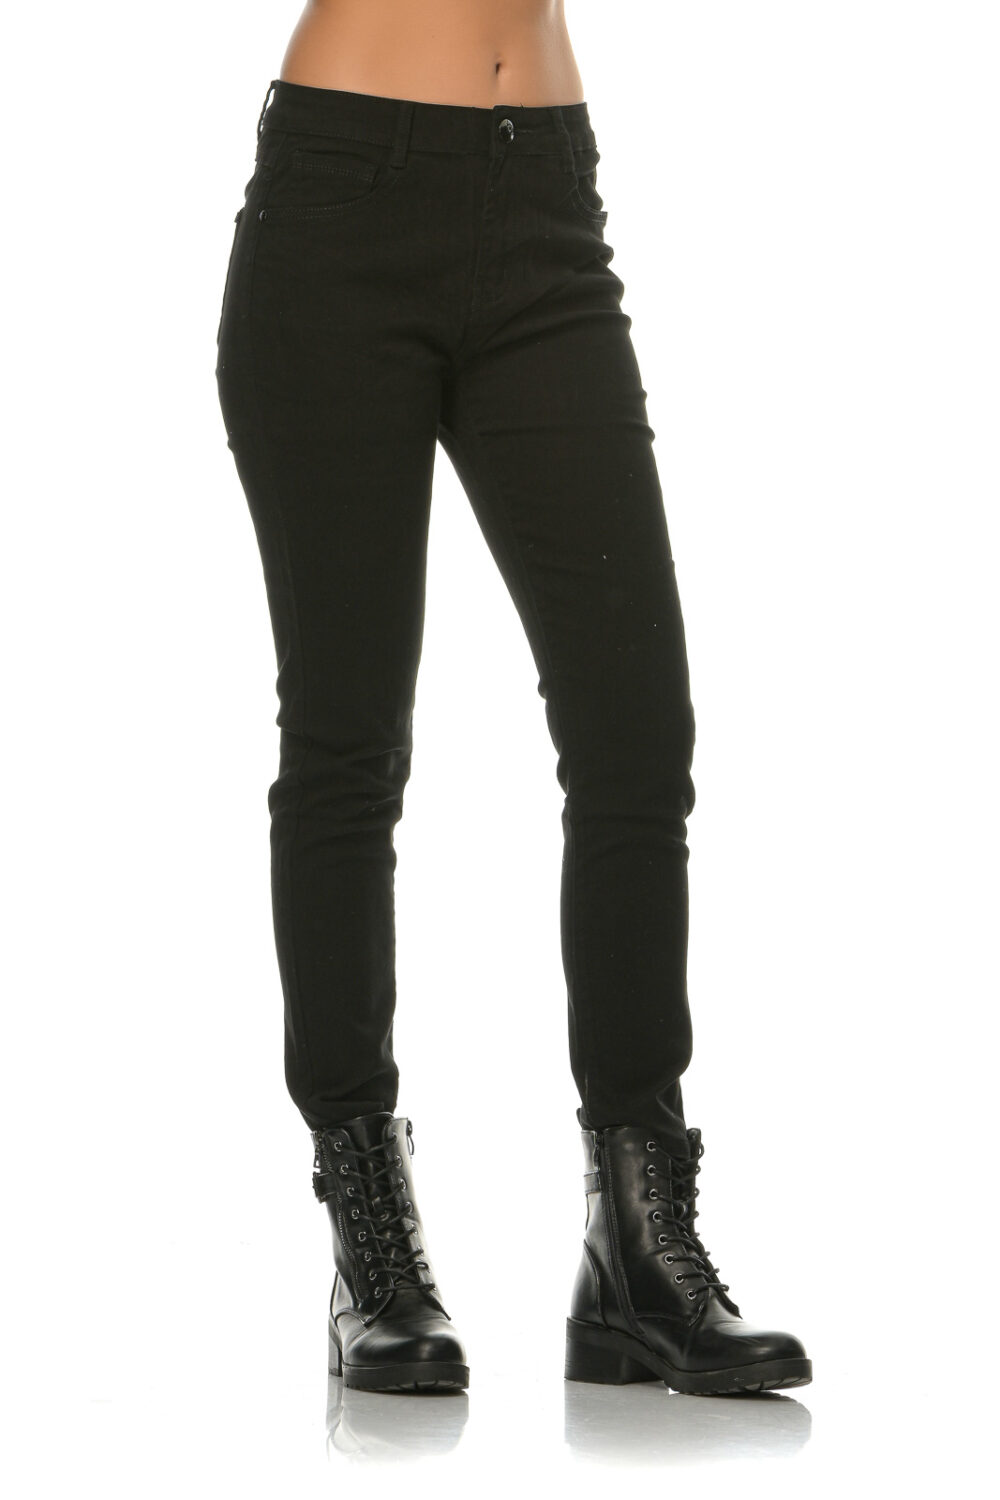 Black jeans elastic large sizes